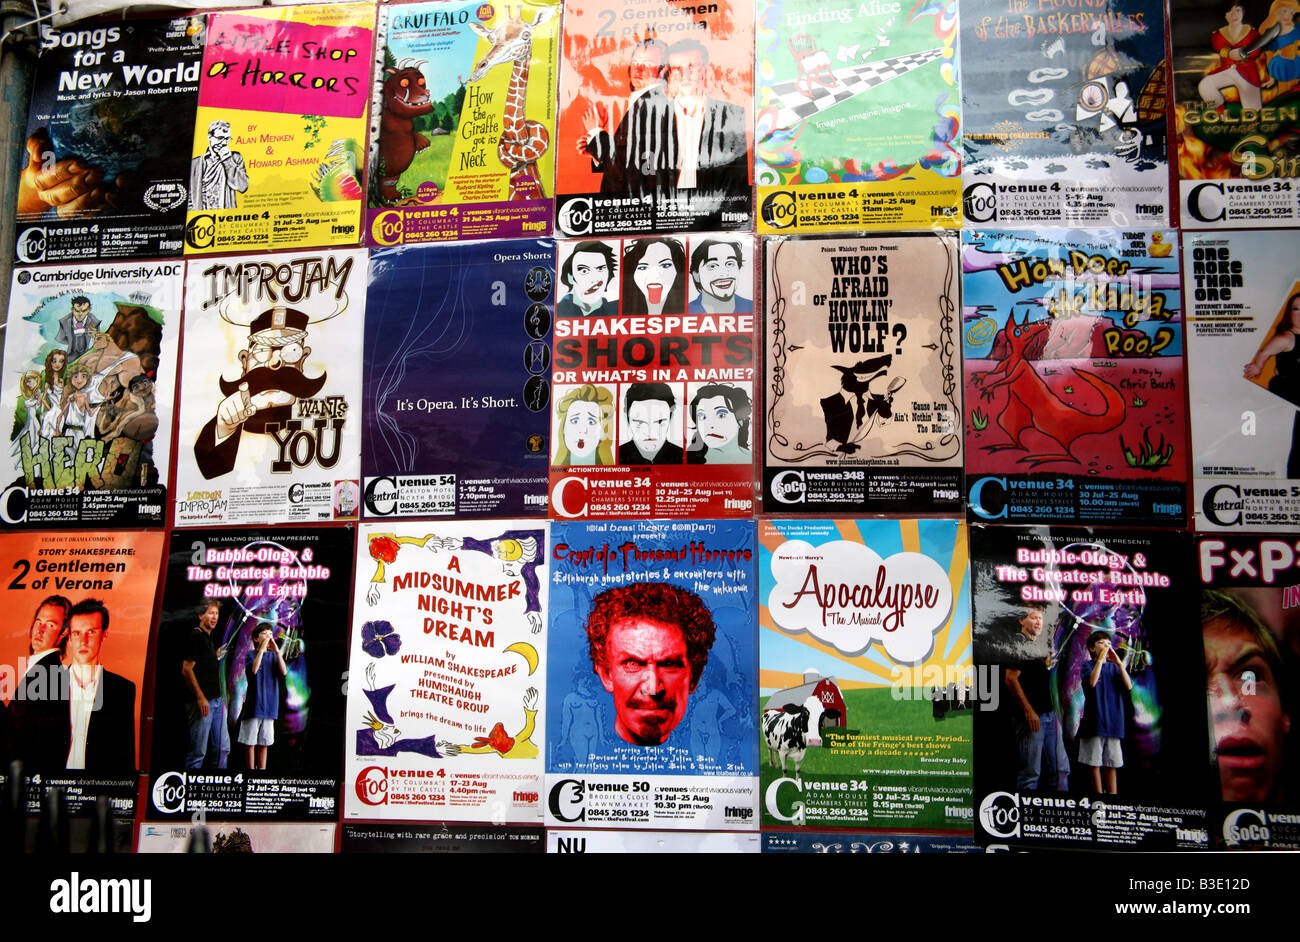 Edinburgh Fringe Festival posters outside a venue Stock Photo